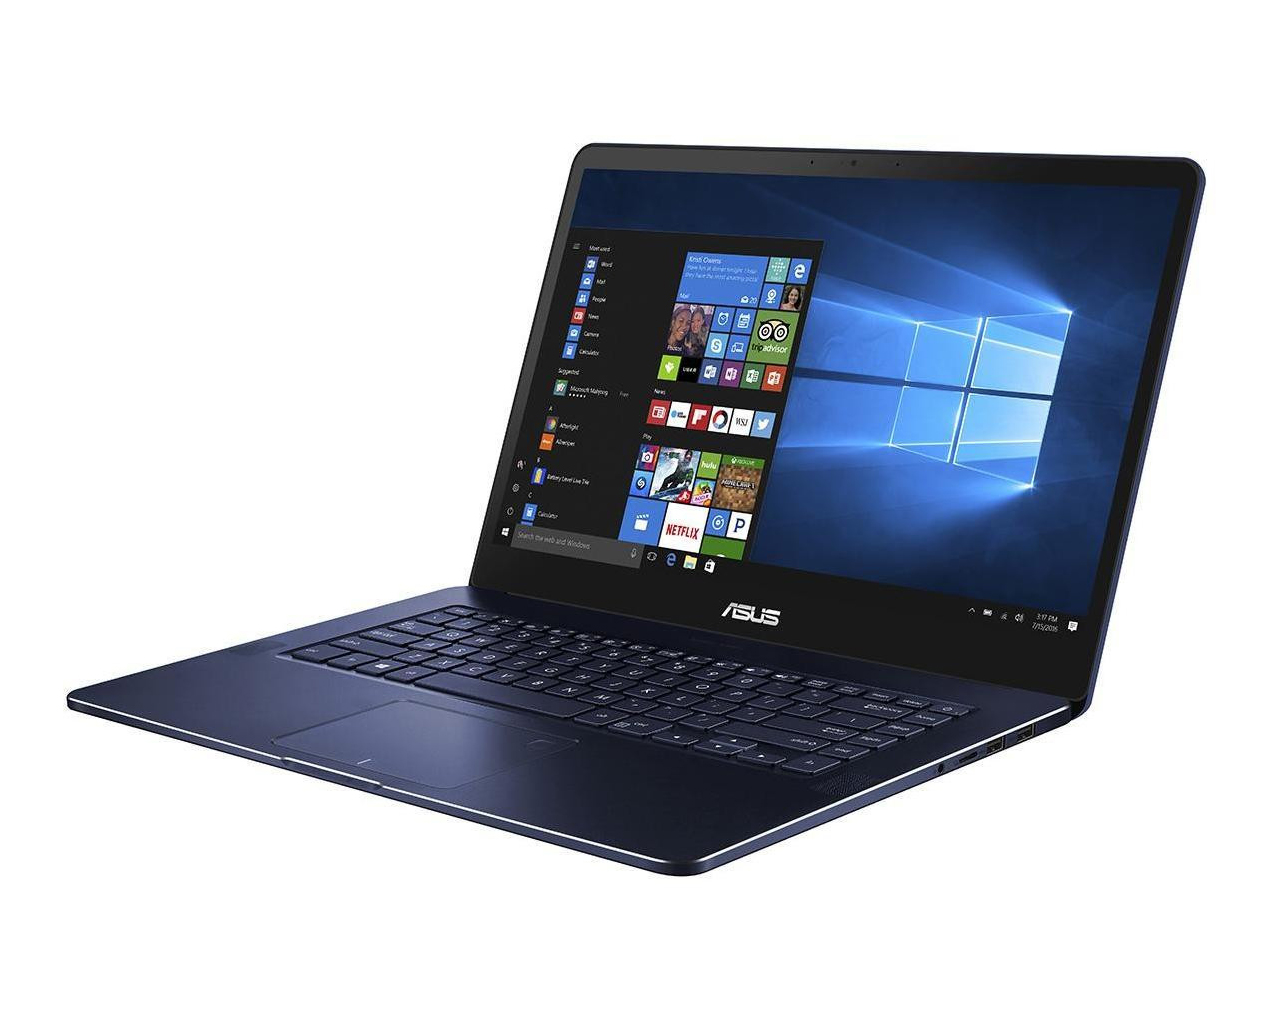 ASUS Zenbook Pro 15 UX550VD Notebook